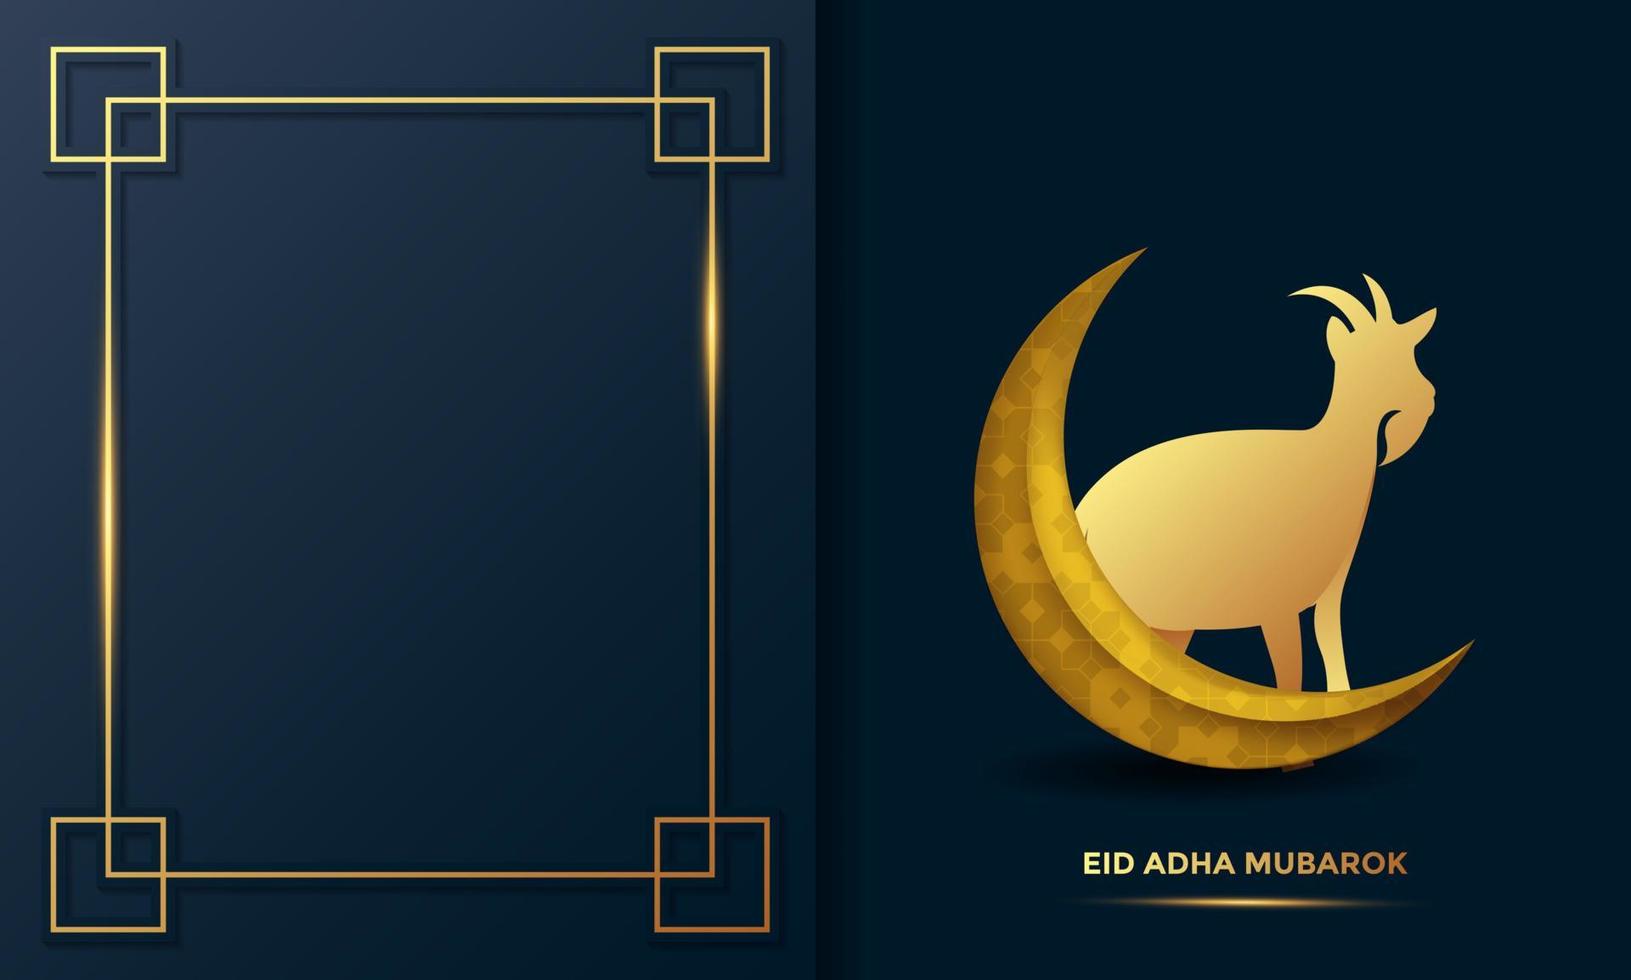 Eid Al Adha Mubarak the celebration of Muslim community festival background vector